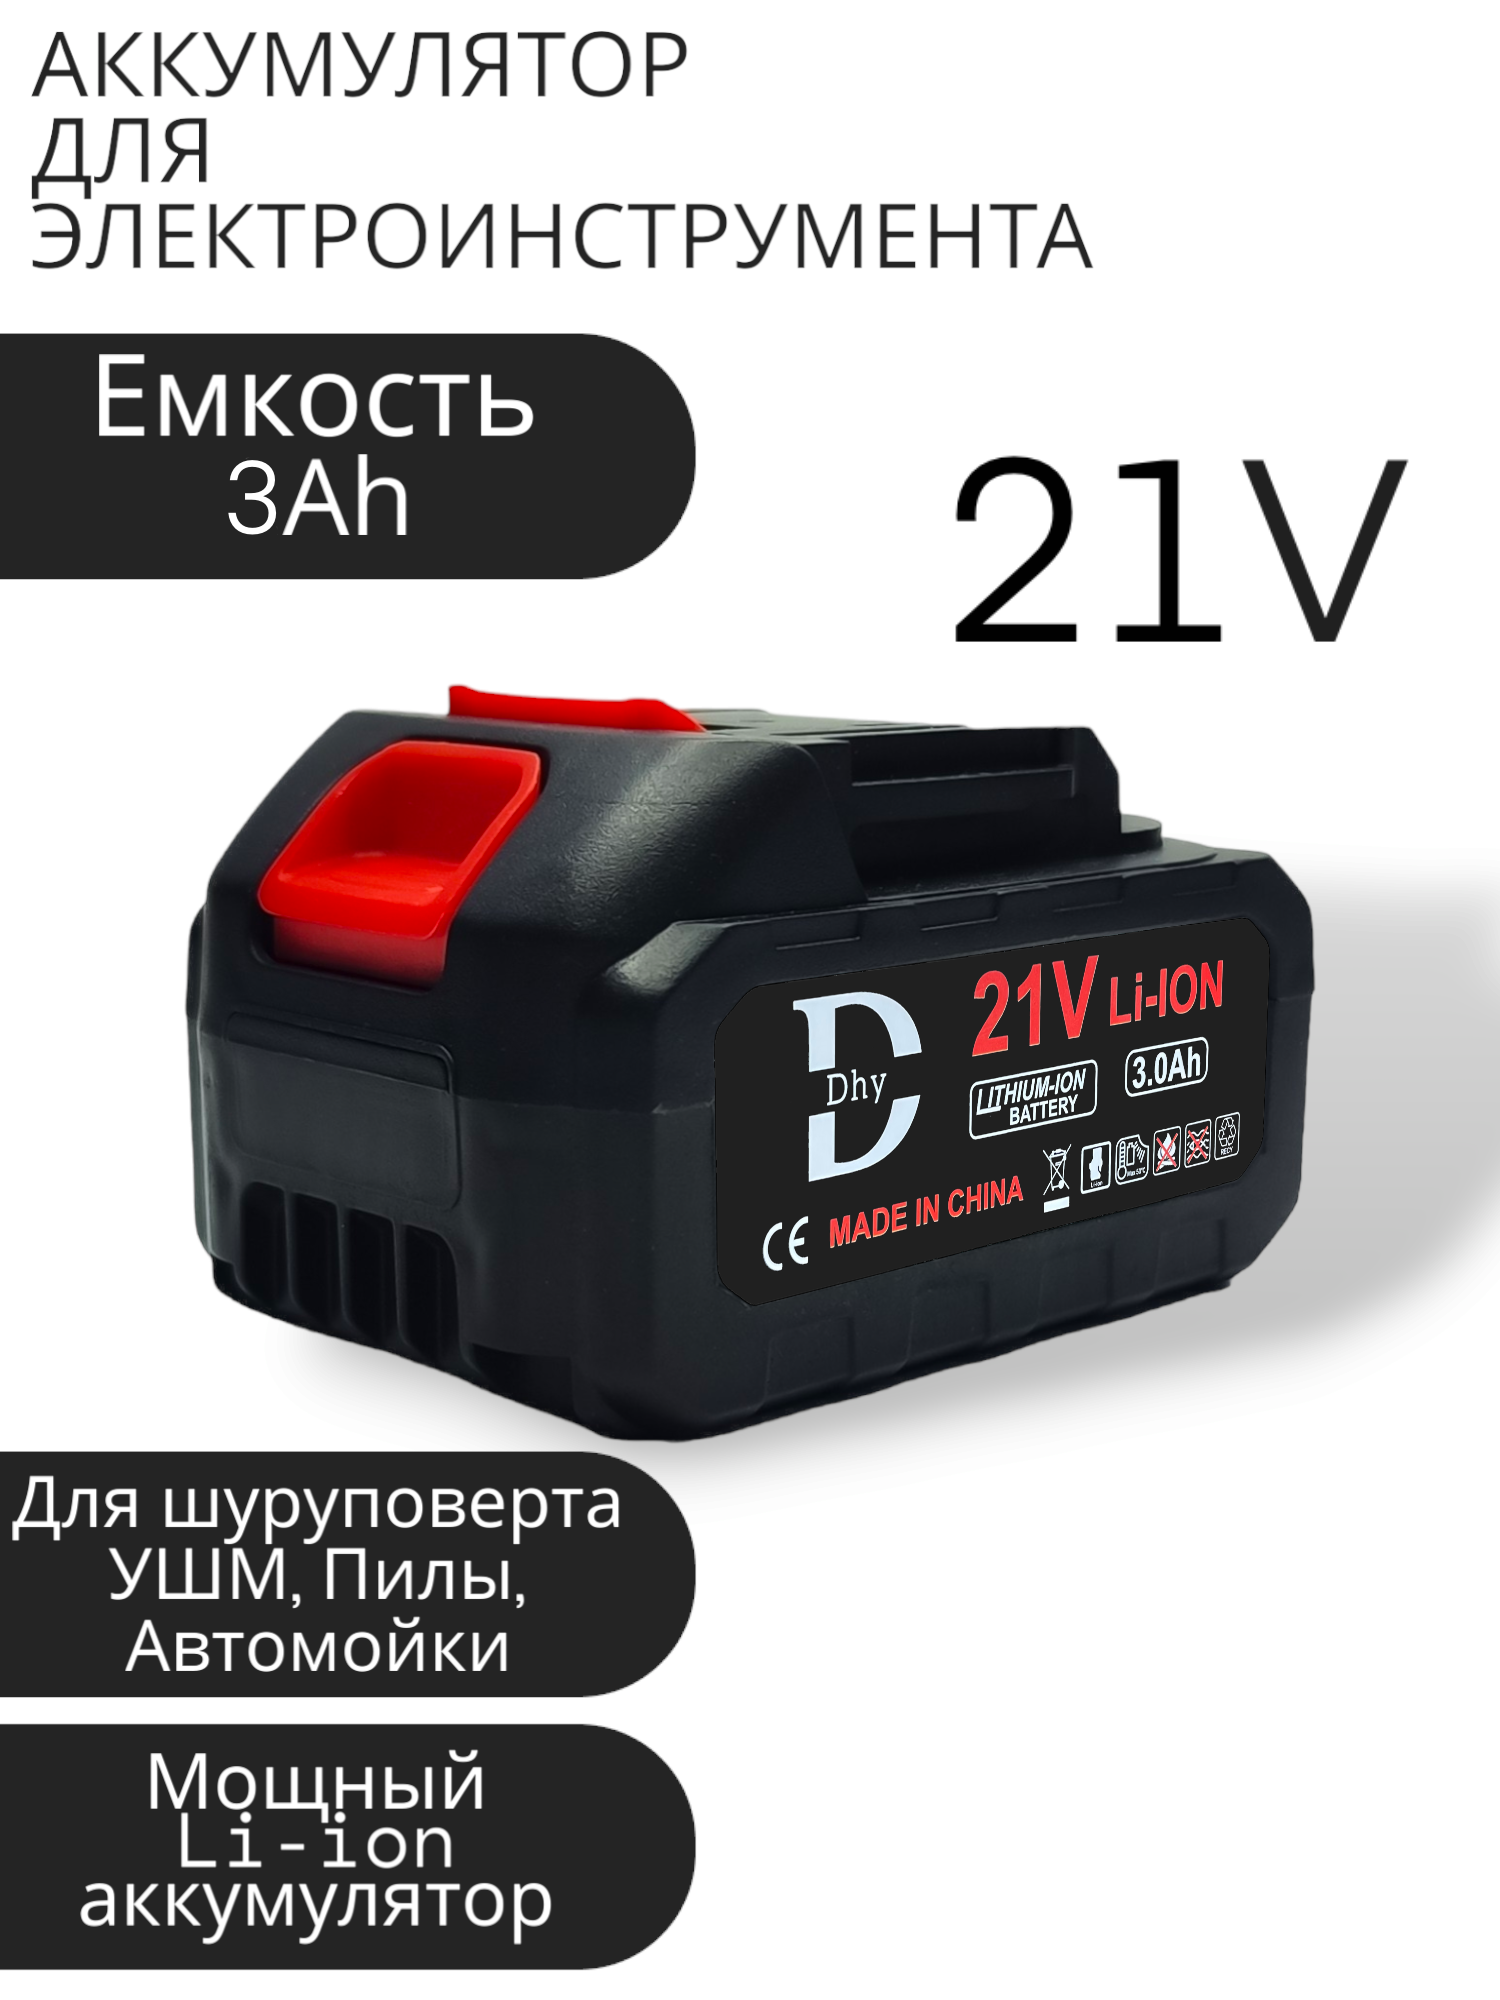 Аккумулятор DHY для электроинструмента